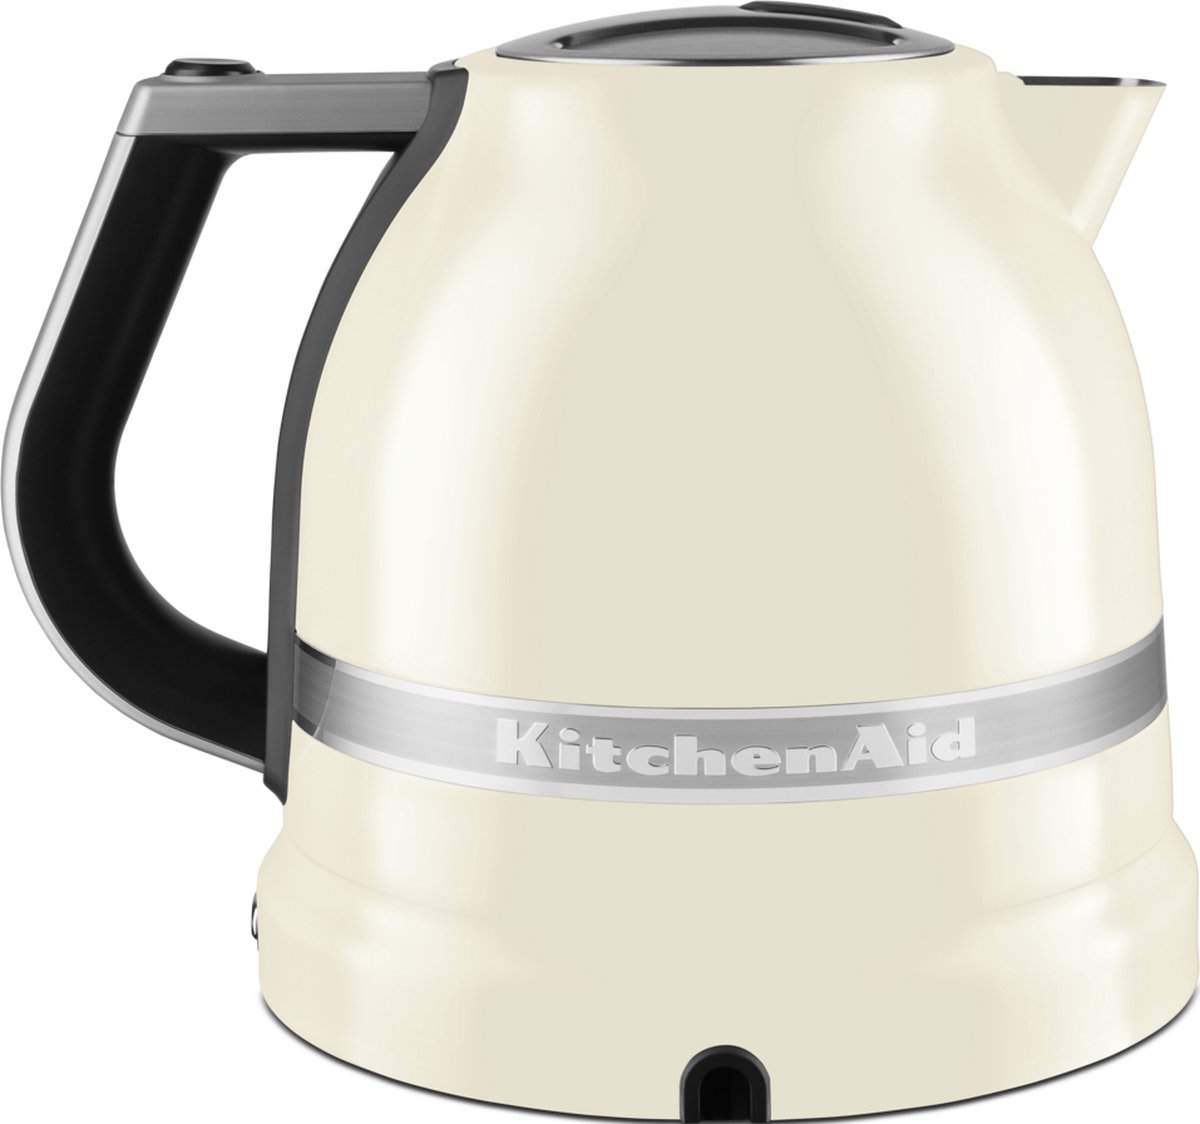 KitchenAid Waterkoker - Artisan Waterkoker met temperatuurmeter - 1,5 L,  Crème | bol.com